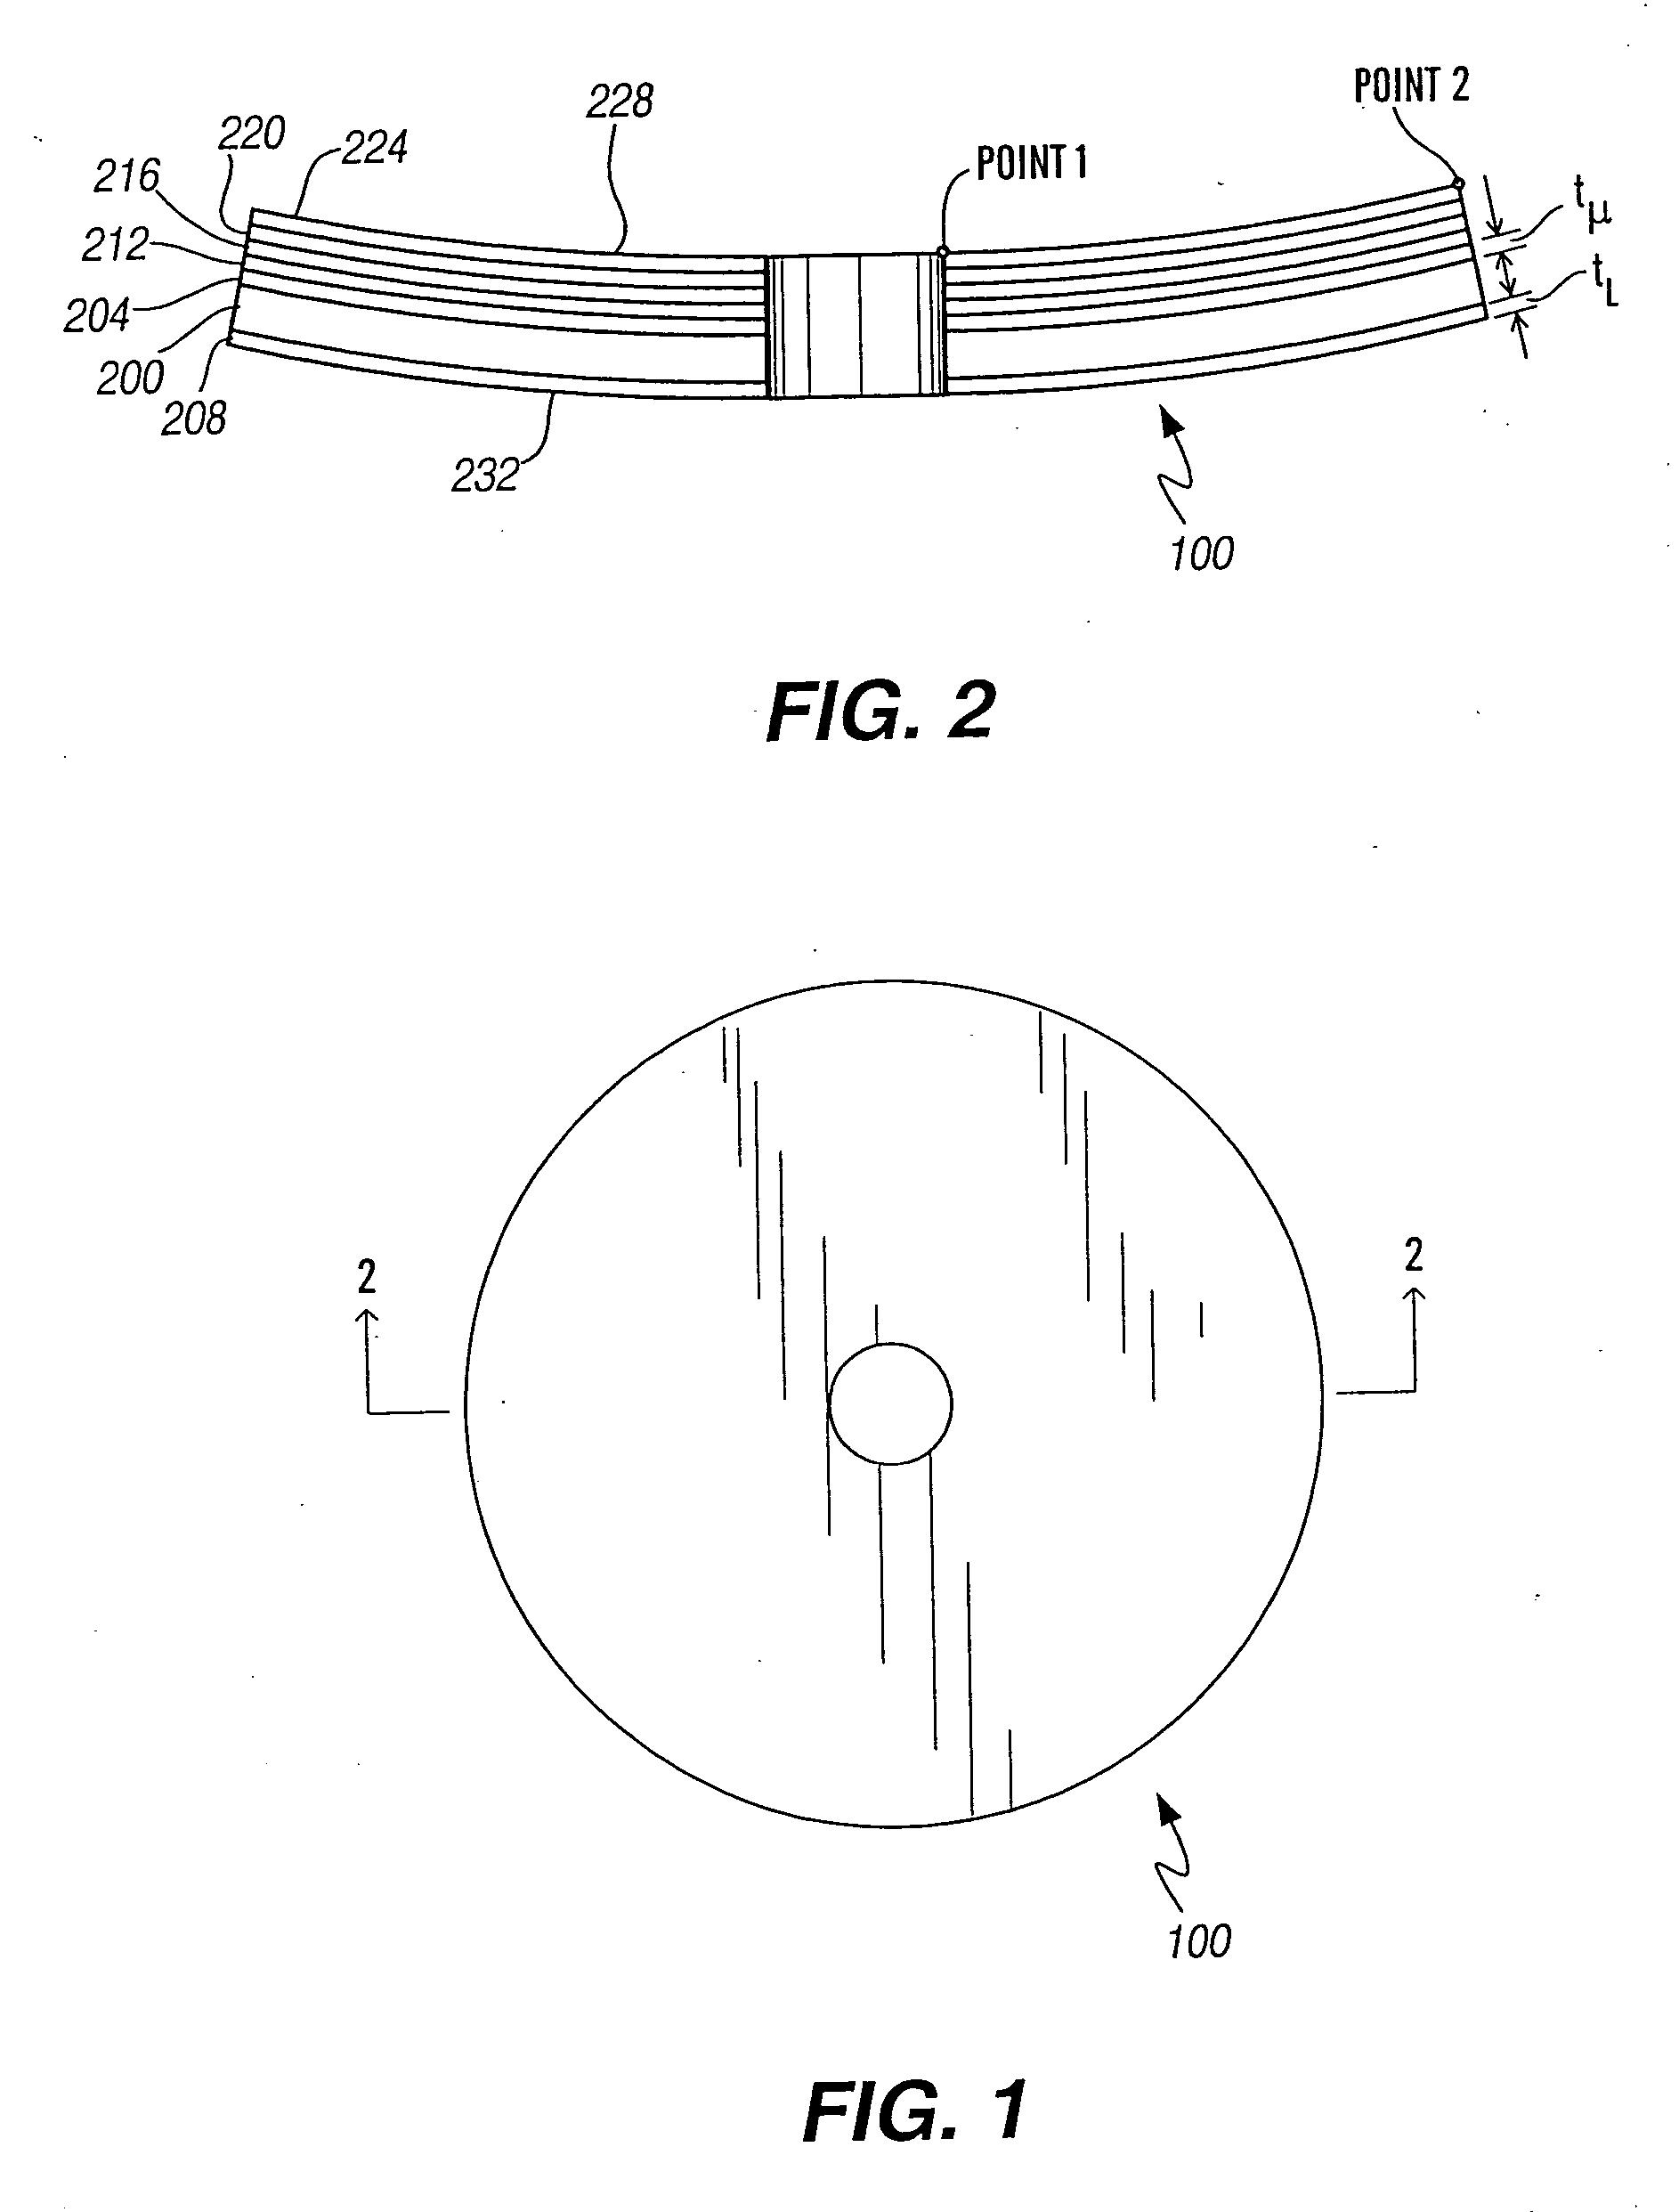 Method of manufacturing single-sided sputtered magnetic recording disks